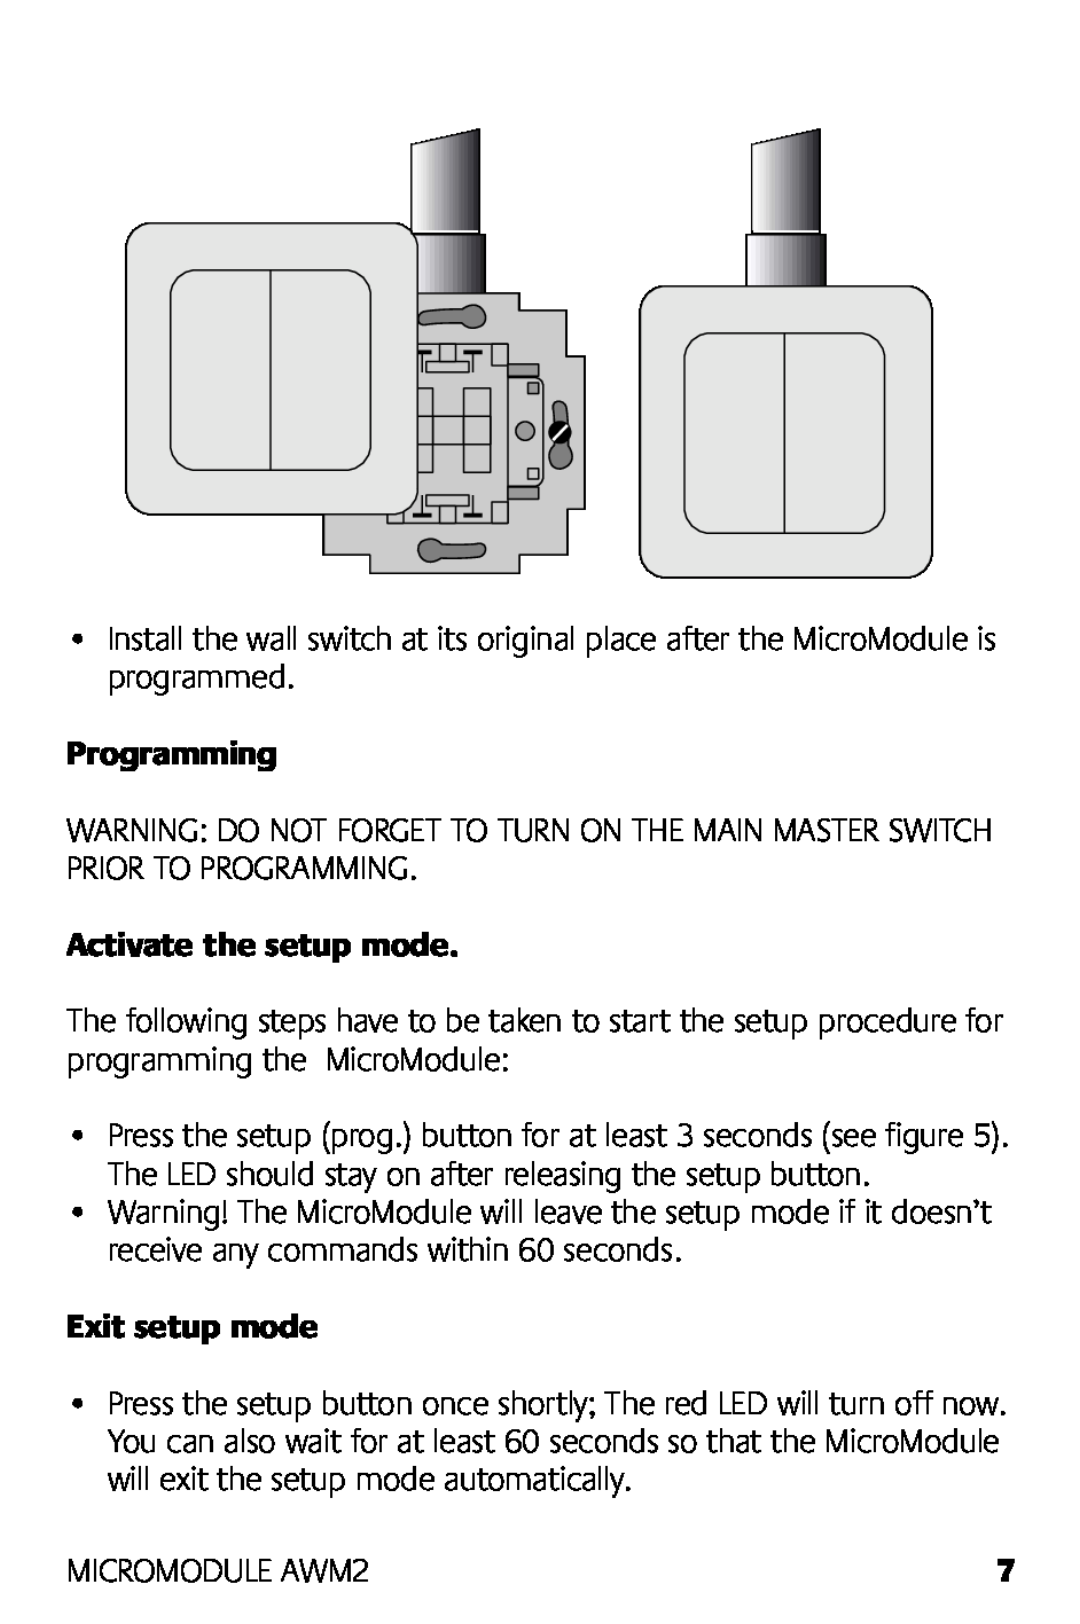 Marmitek manual Programming, Activate the setup mode, Exit setup mode, MICROMODULE AWM2 